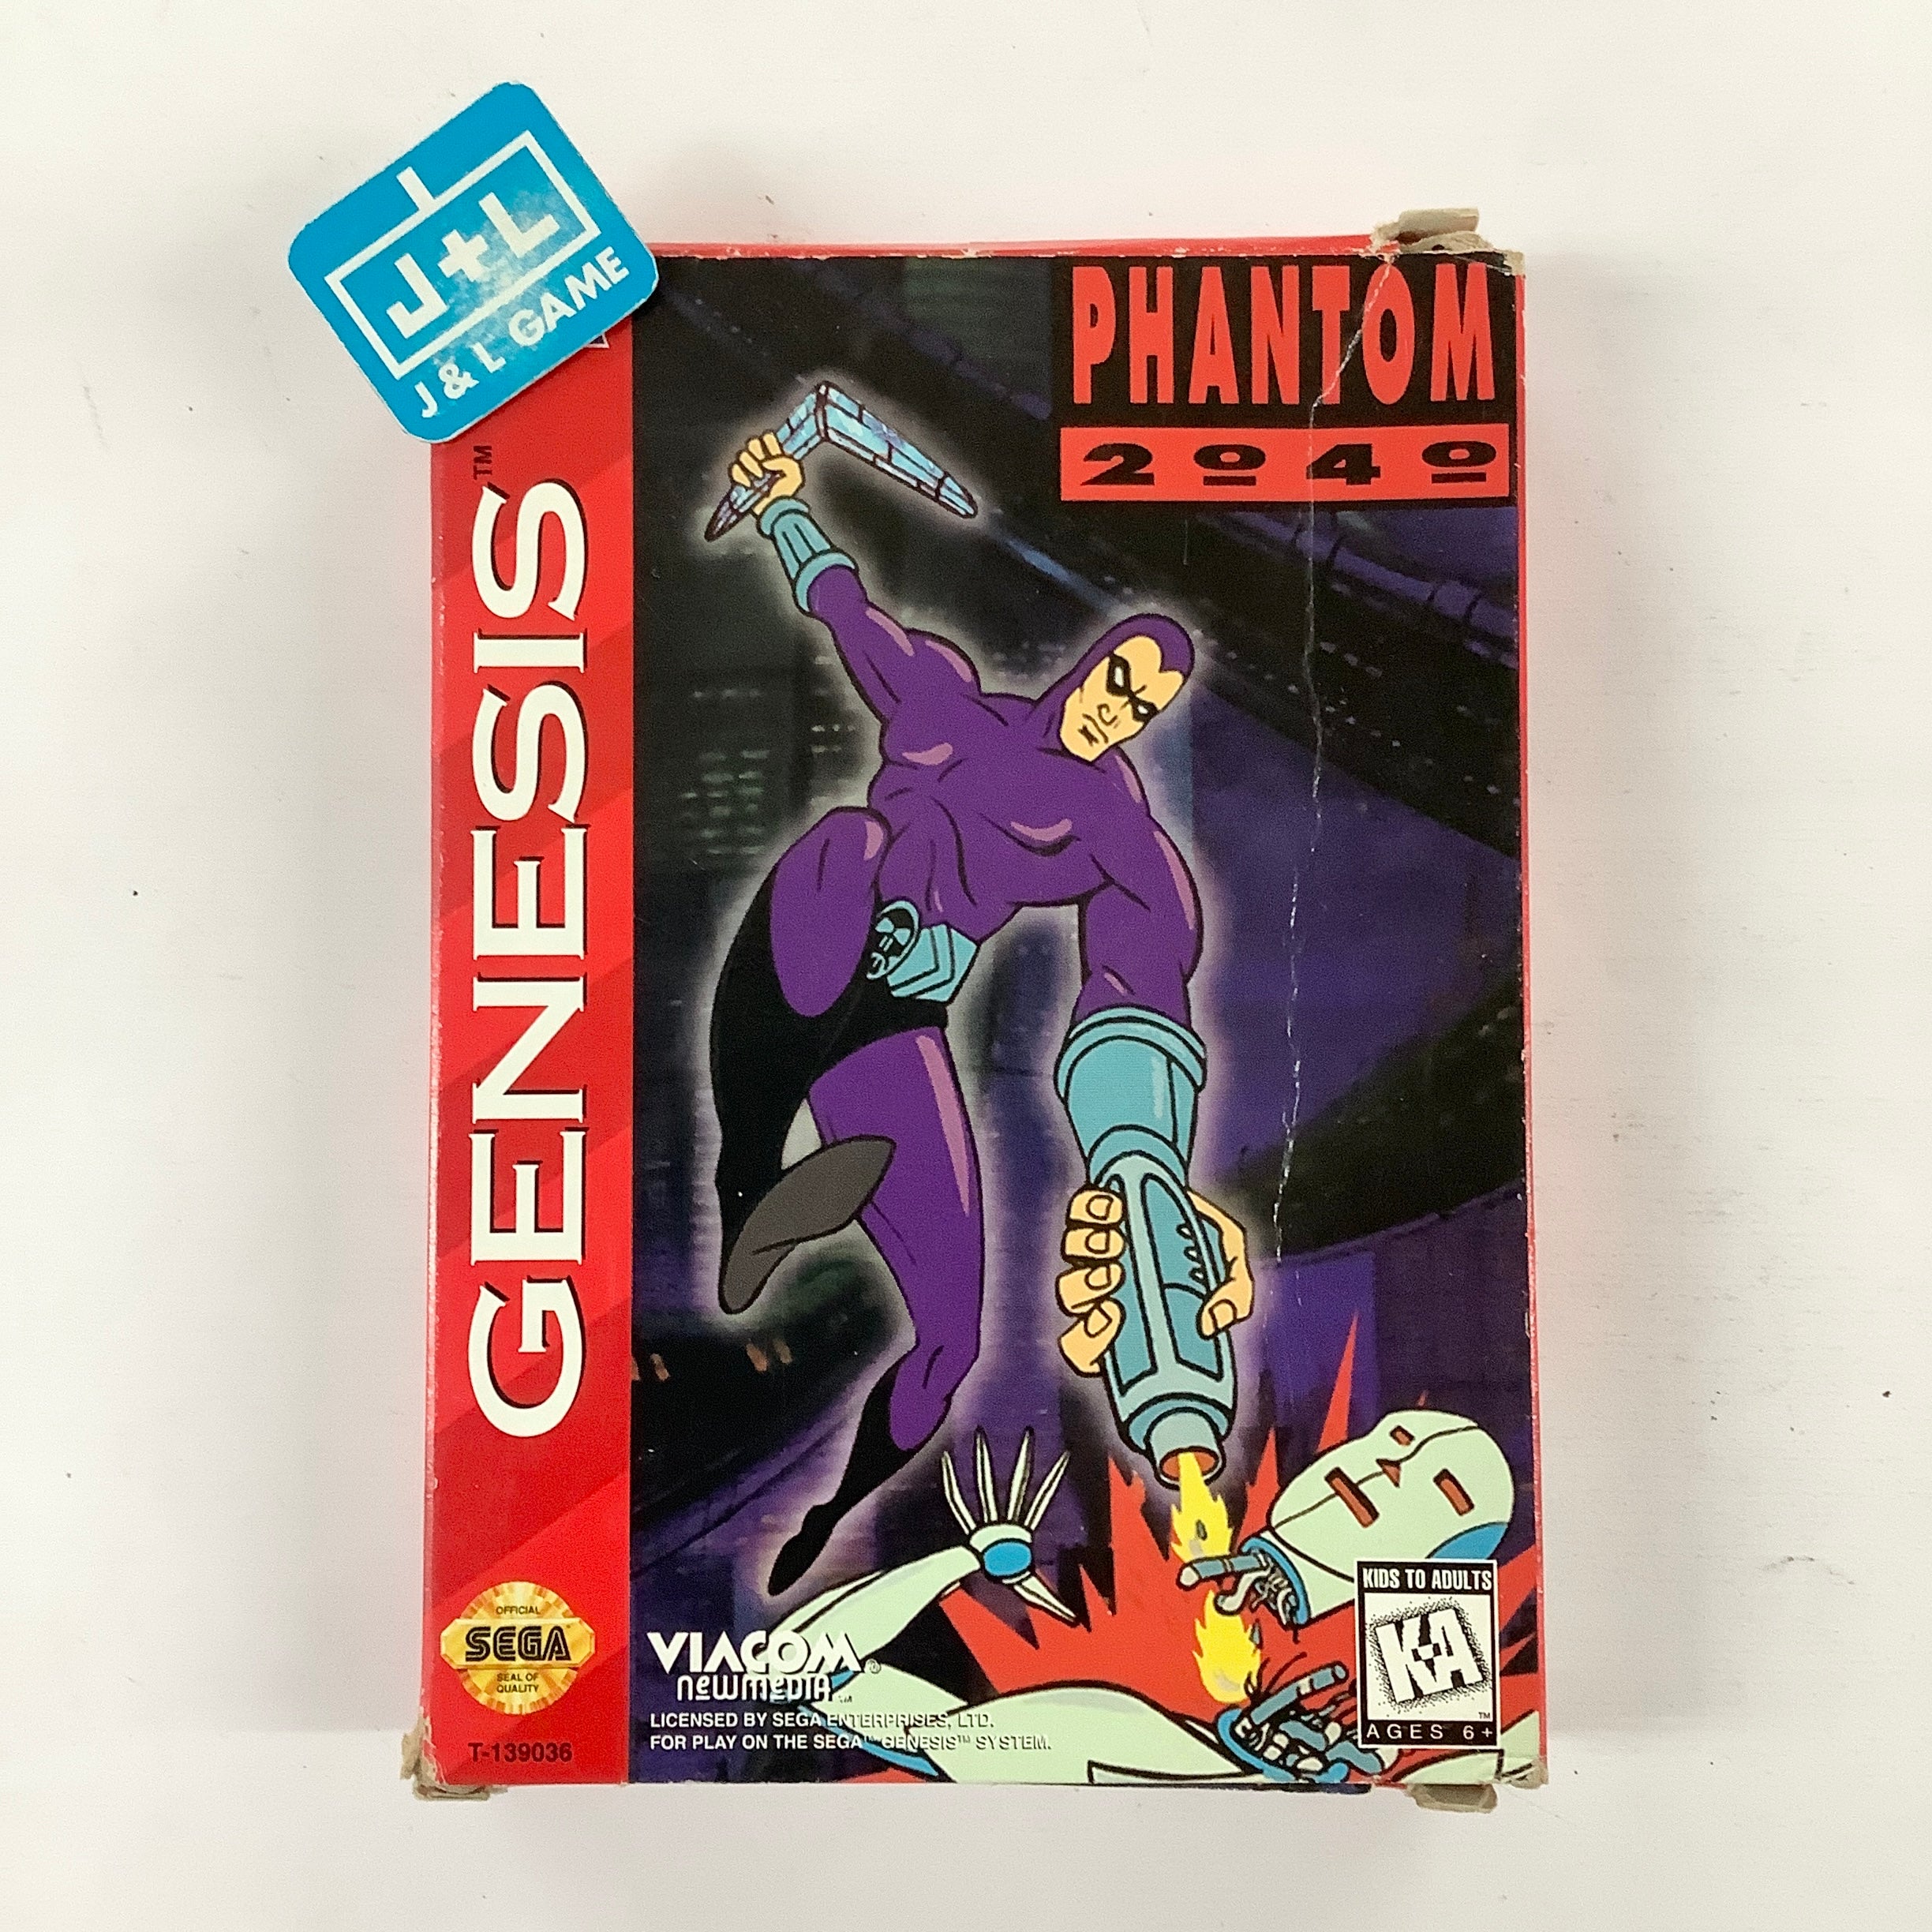 Phantom 2040 - (SG) SEGA Genesis [Pre-Owned] Video Games Viacom New Media   